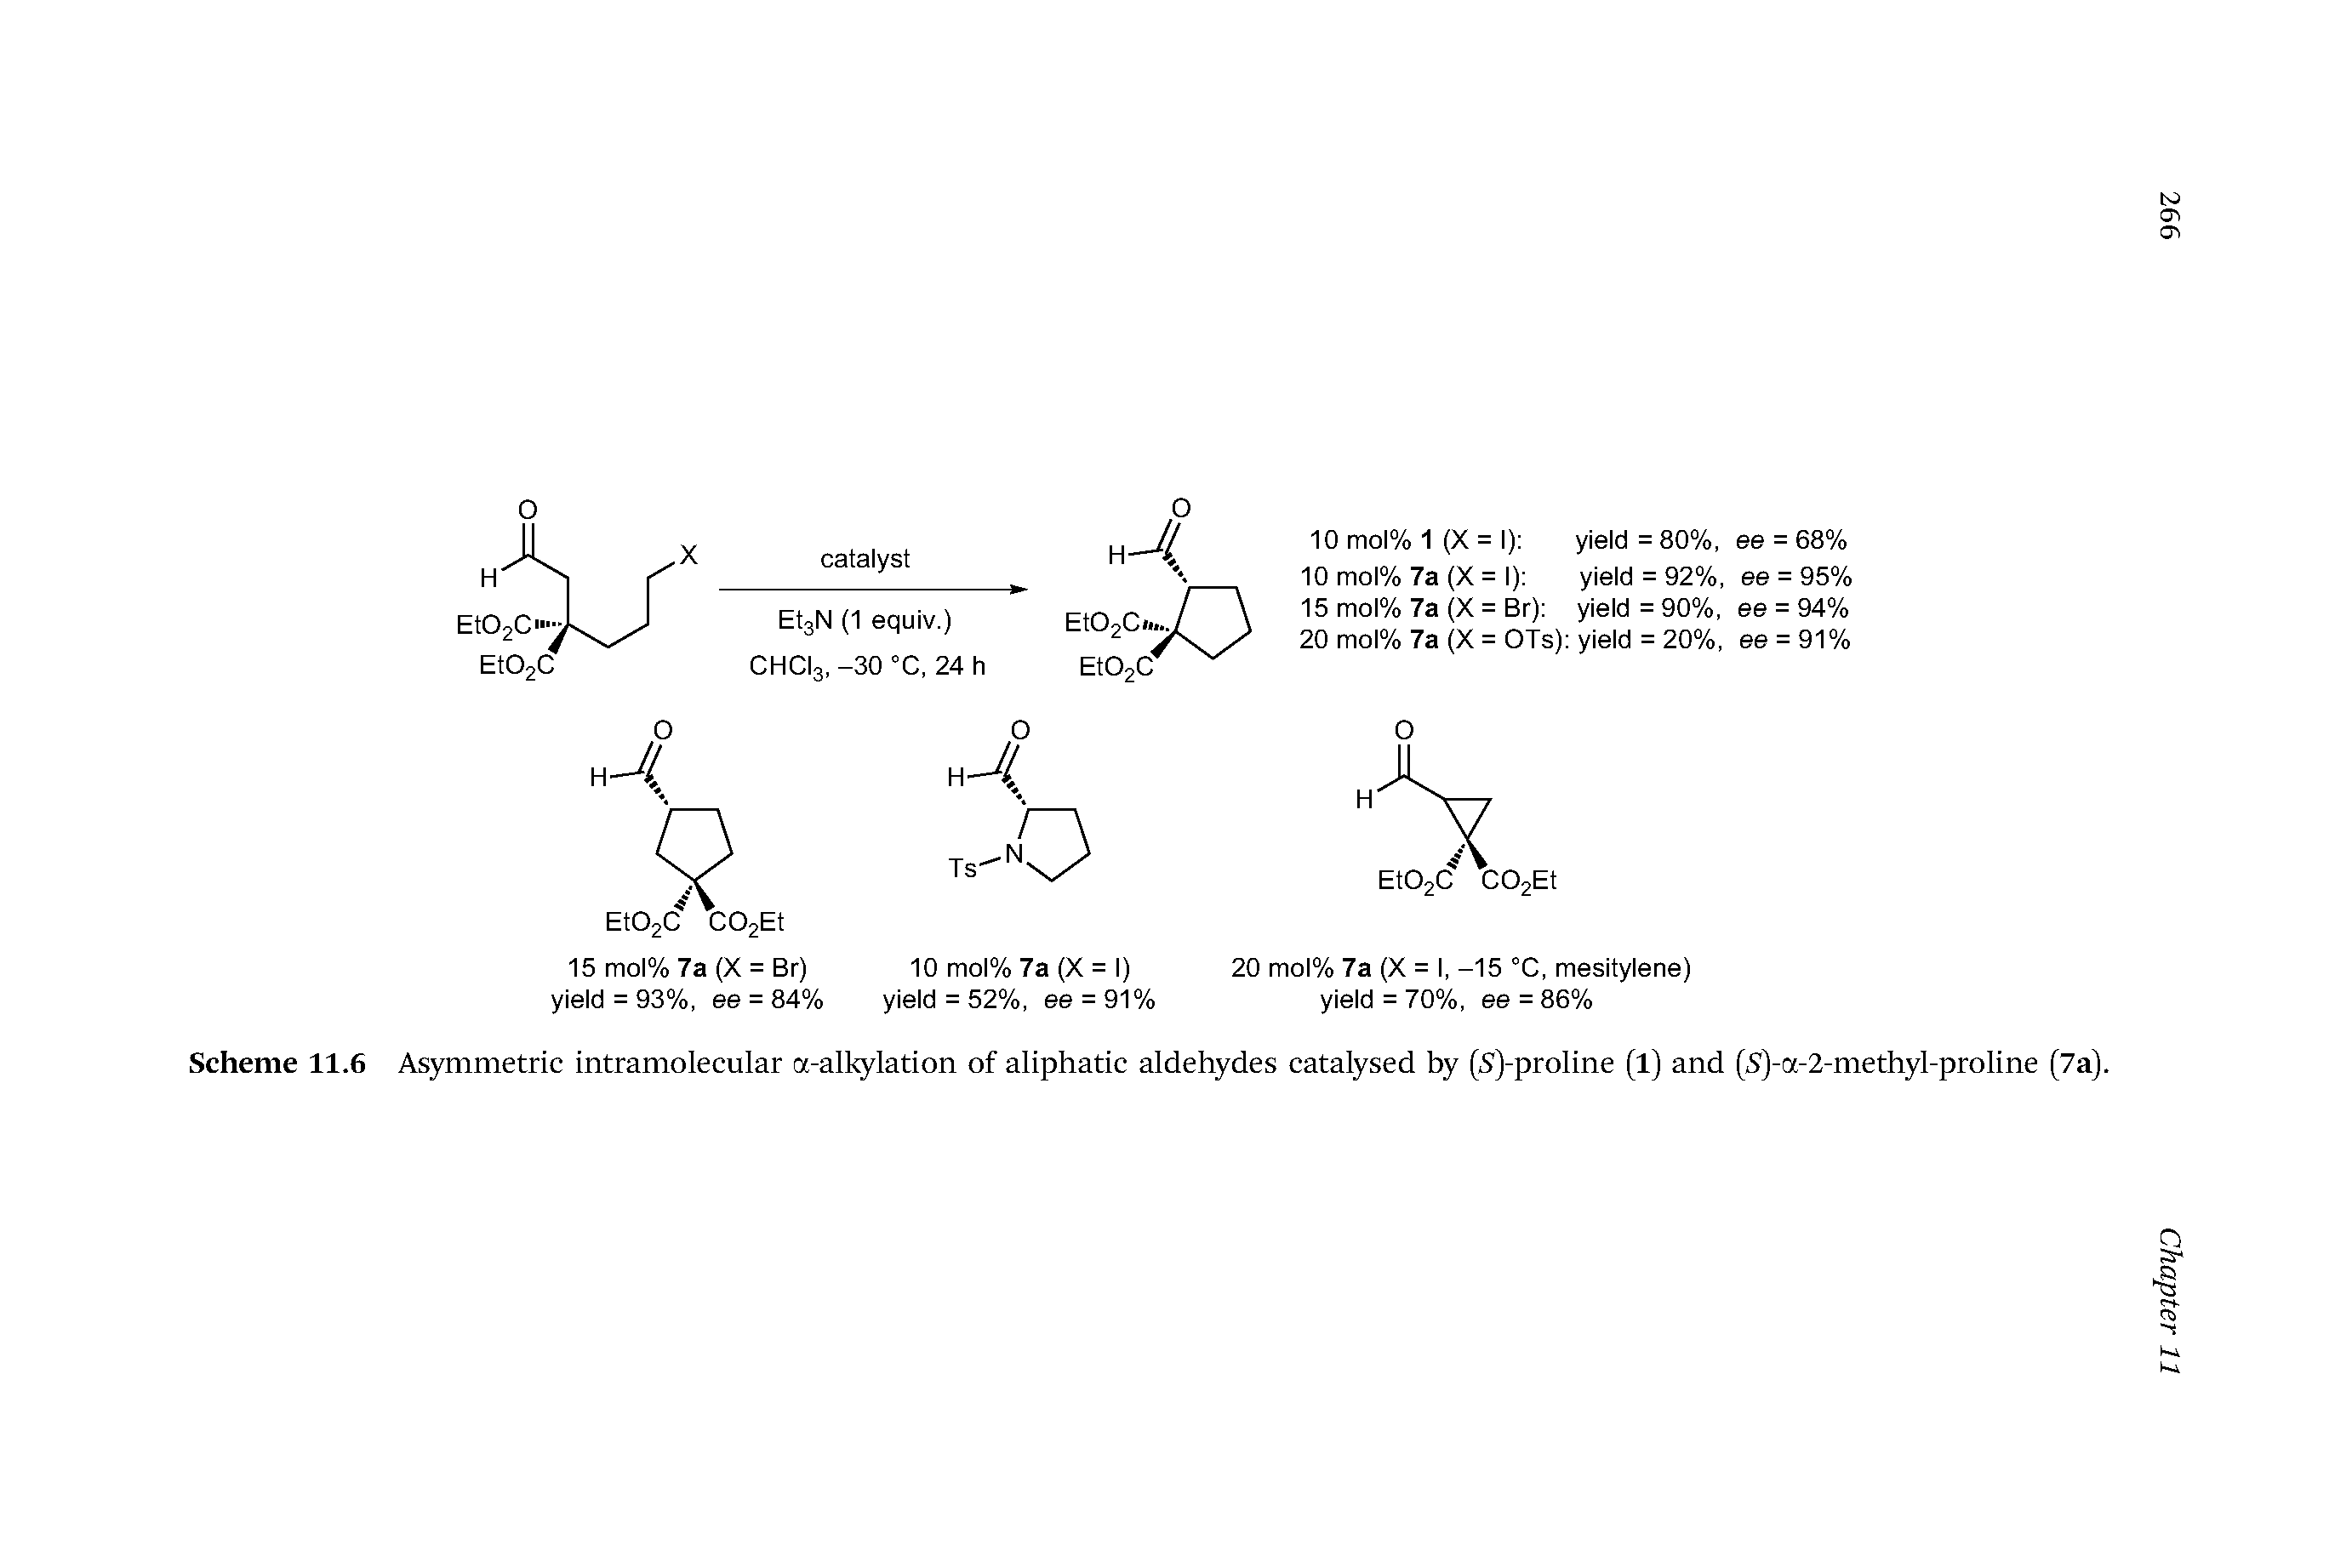 Scheme 11.6 Asymmetric intramolecular a-alkylation of aliphatic aldehydes catalysed by (S)-proline (1) and (S)-a-2-methyl-proline (7a).